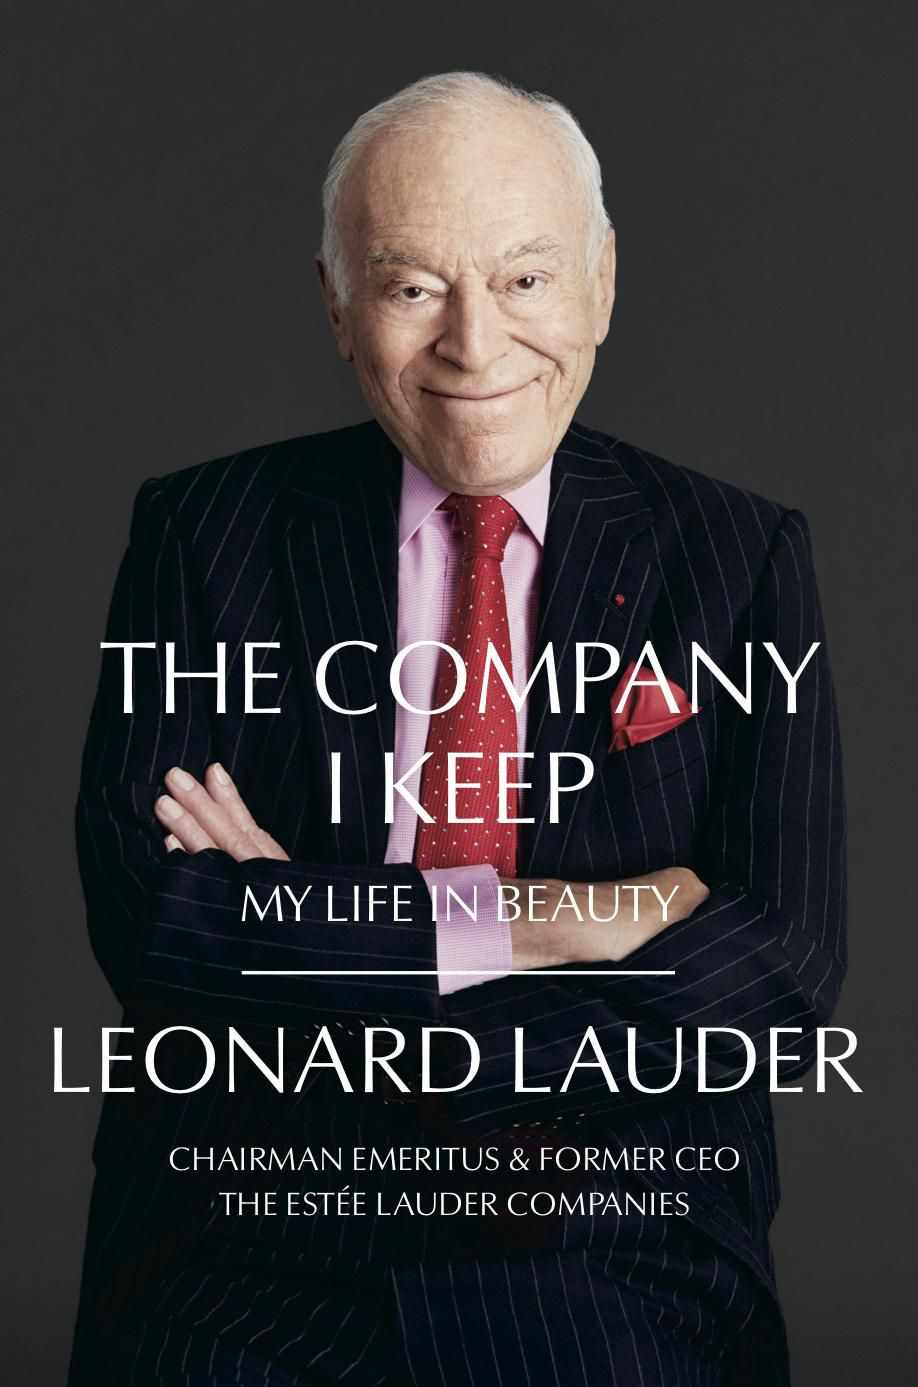 lauder company leonard master strategist